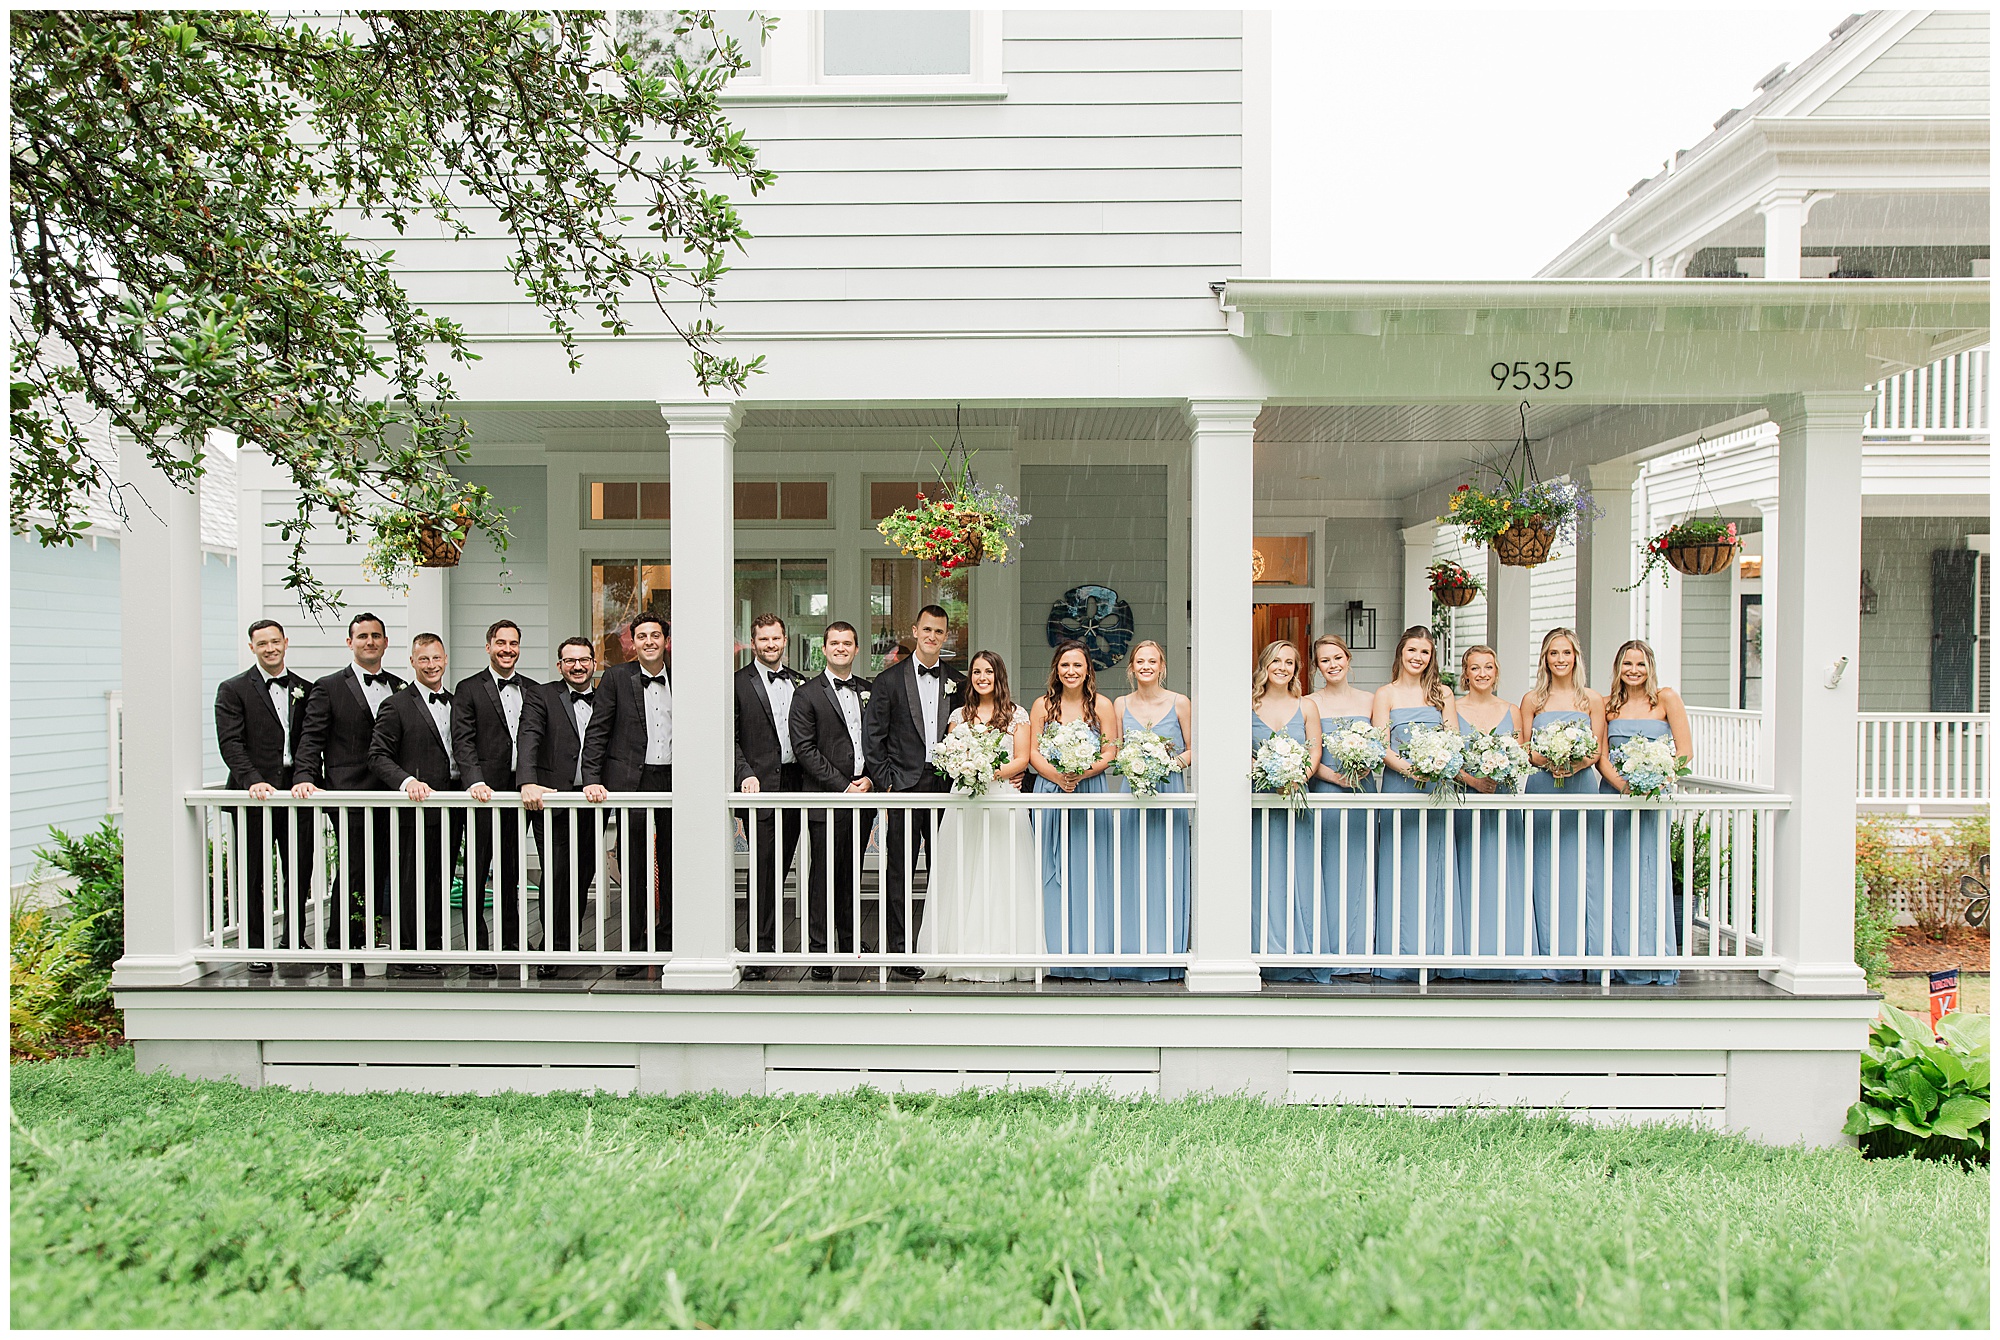 Danielle & Chris, East Beach wedding, Hampton Roads weddings, Kelley Stinson Photography, powder blue bridesmaids, black tie groomsmen